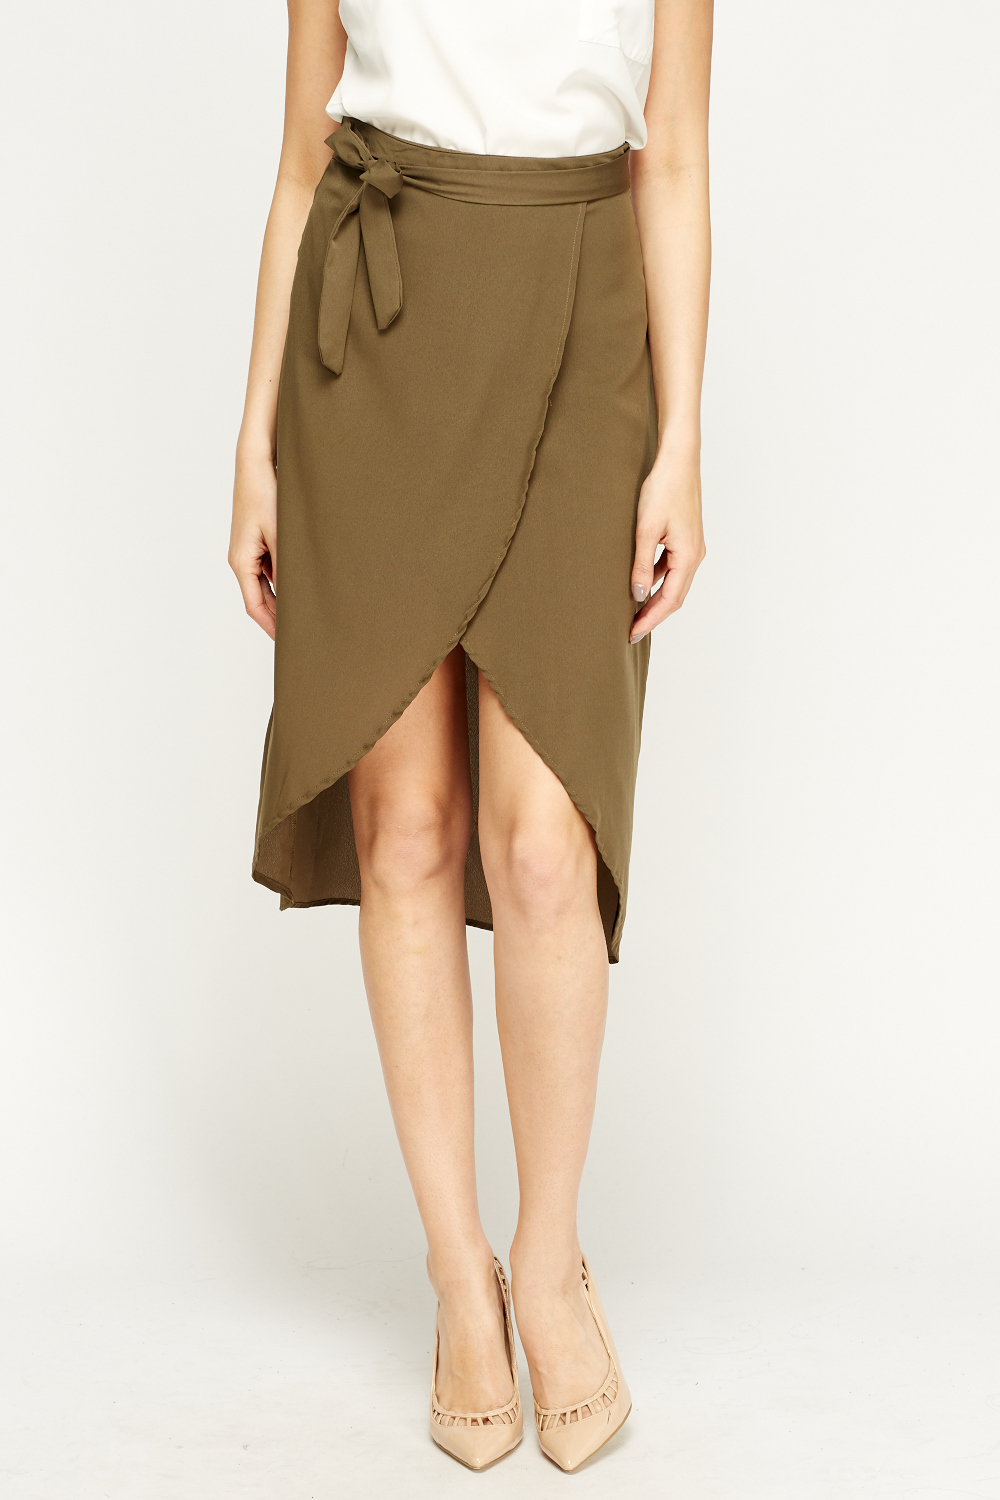 Olive Sheer Wrap Skirt - Just $3